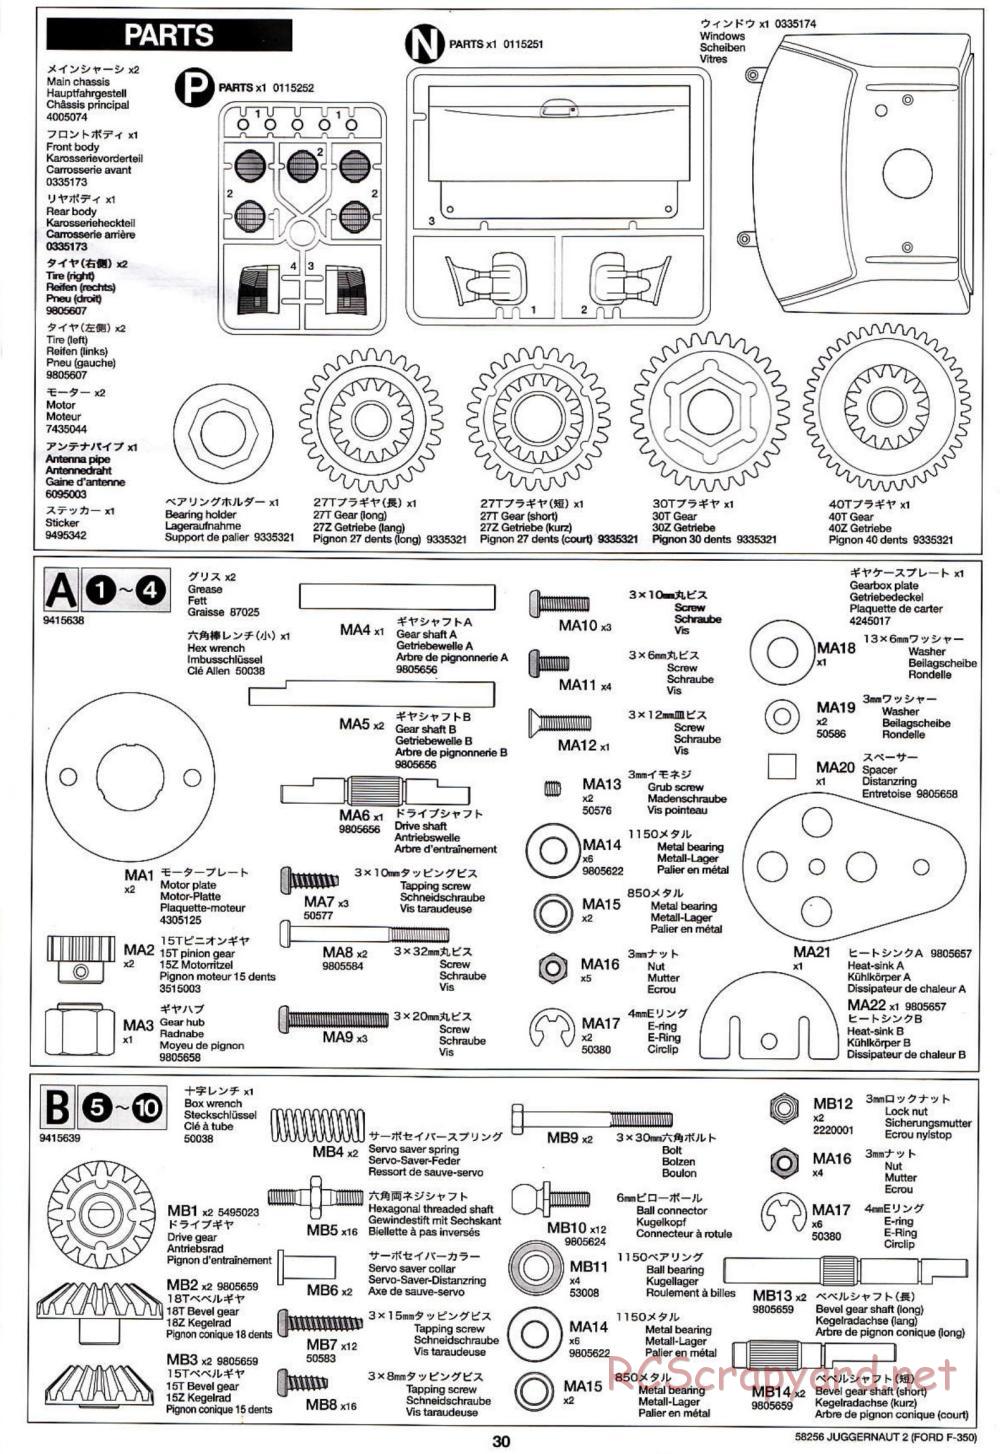 Tamiya - Juggernaut 2 Chassis - Manual - Page 30